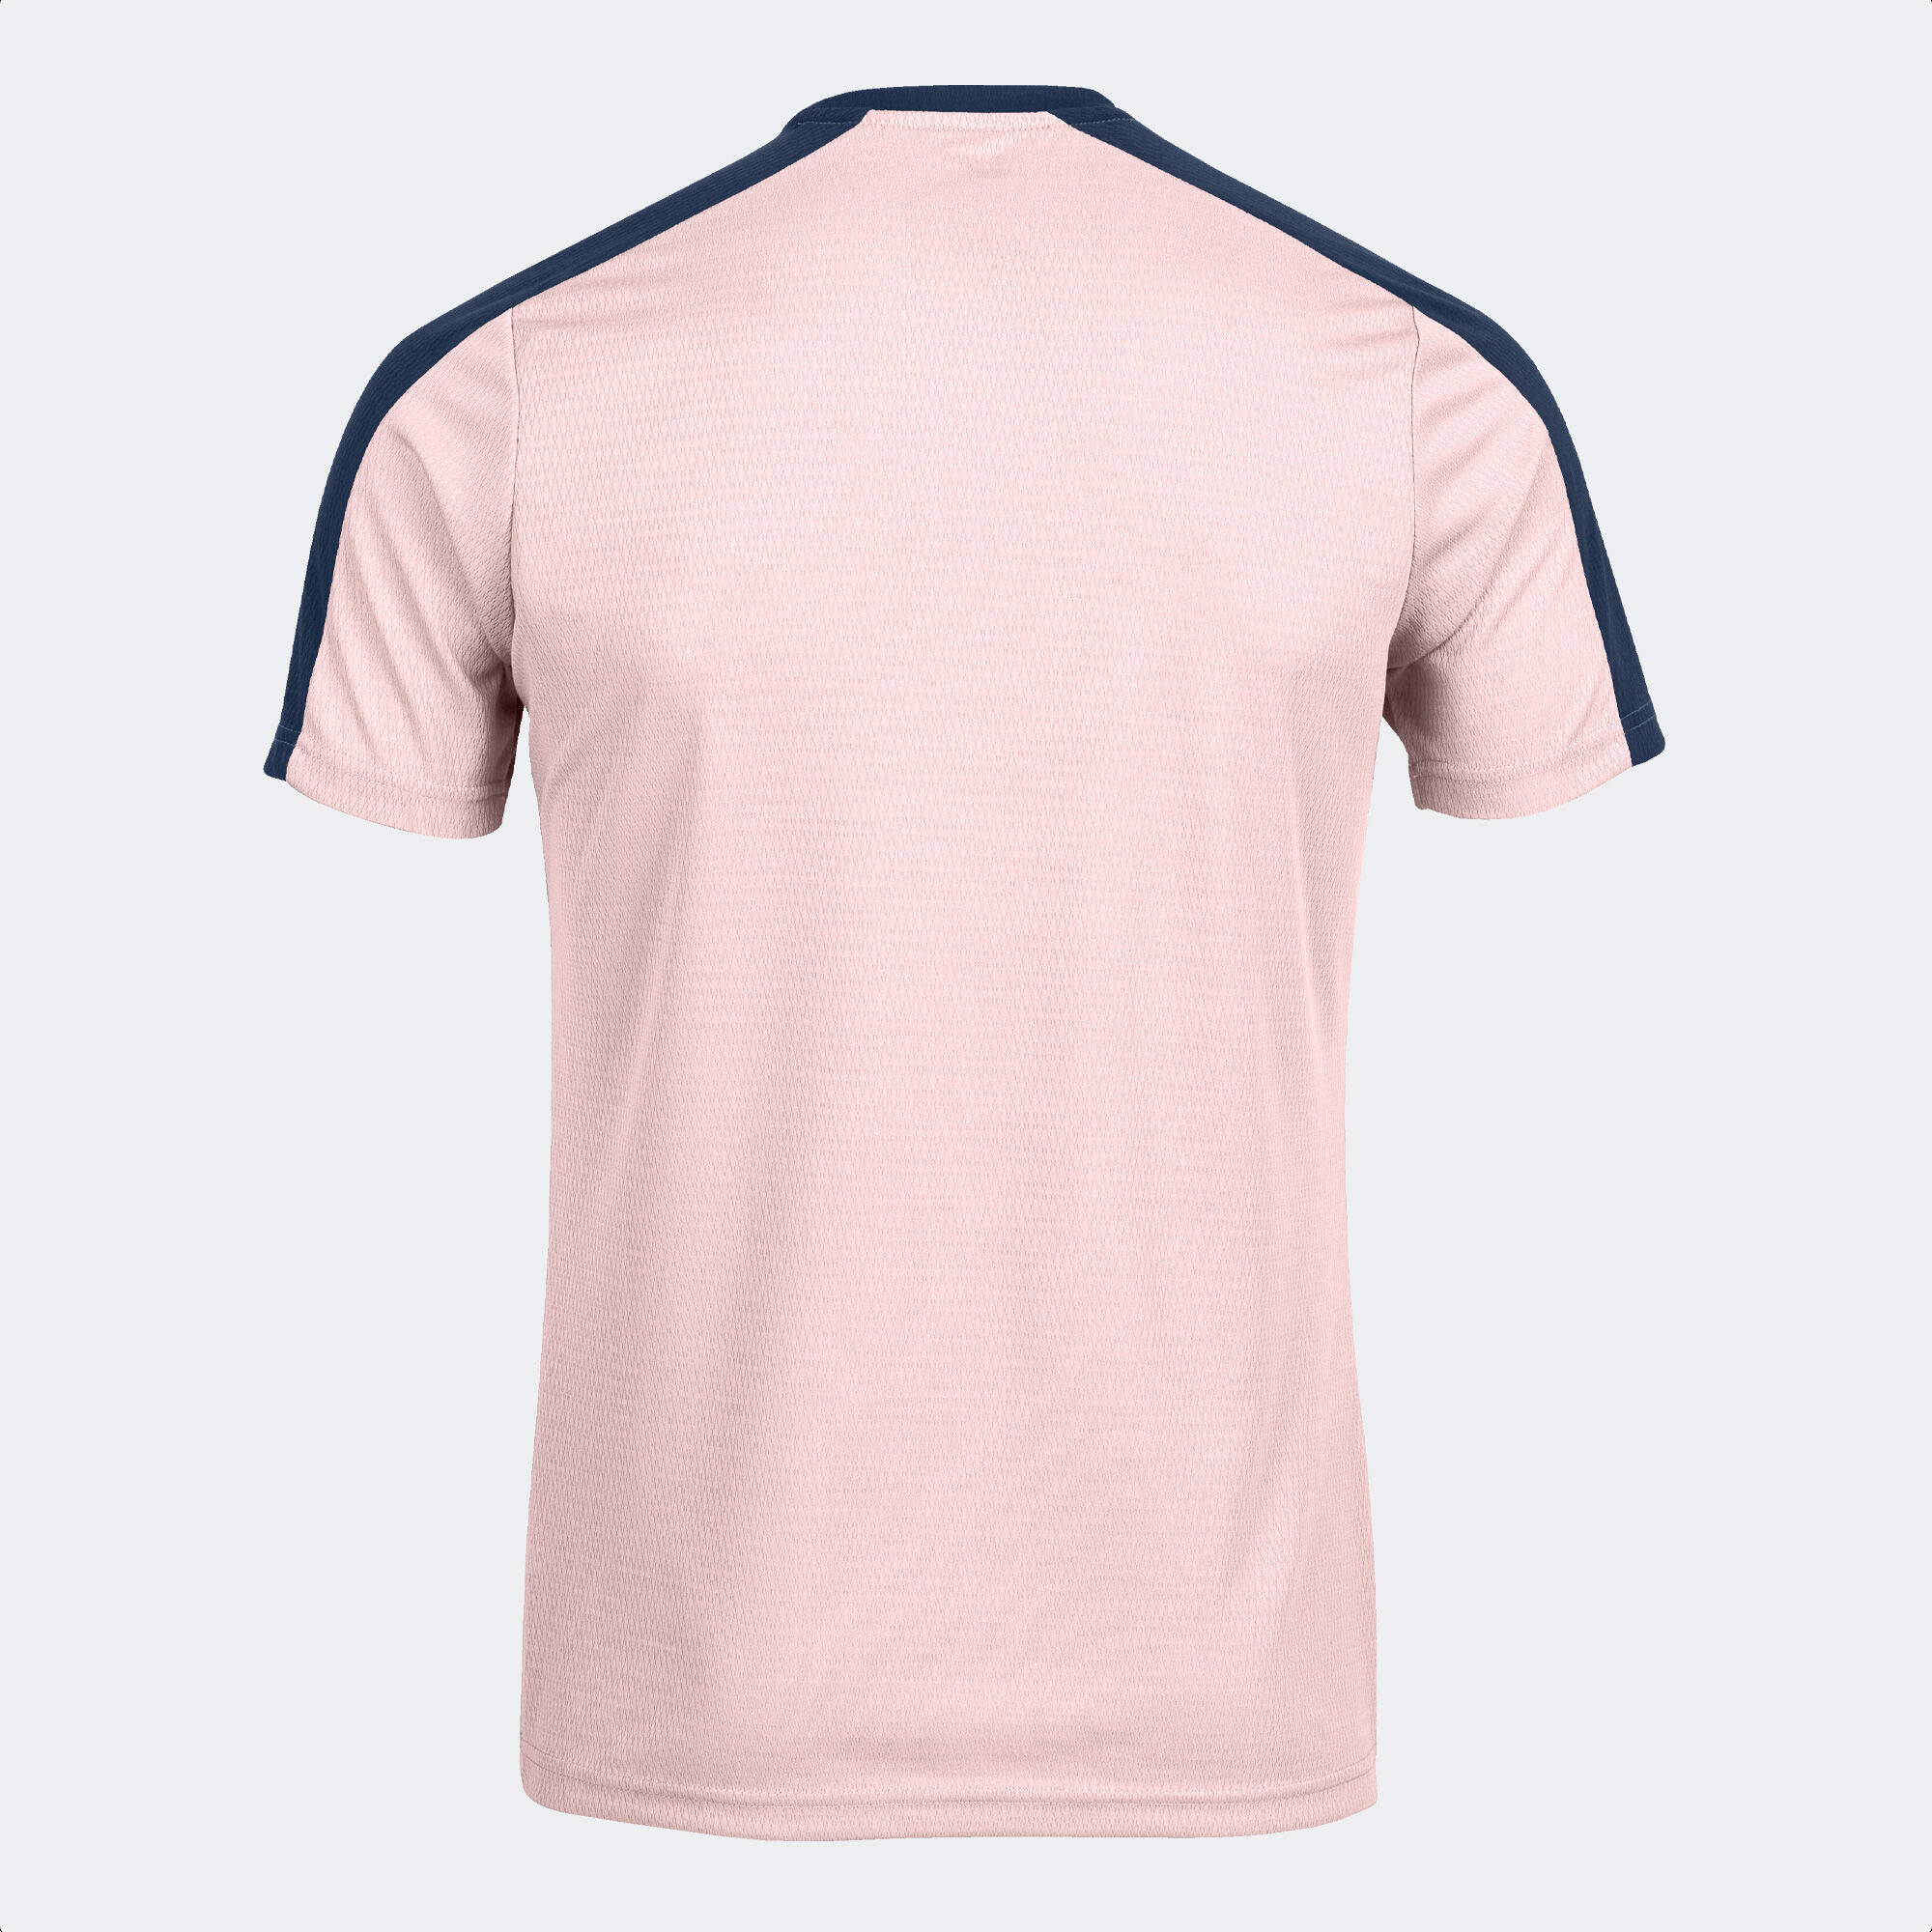 T-shirt manga curta homem Eco Championship rosa azul marinho